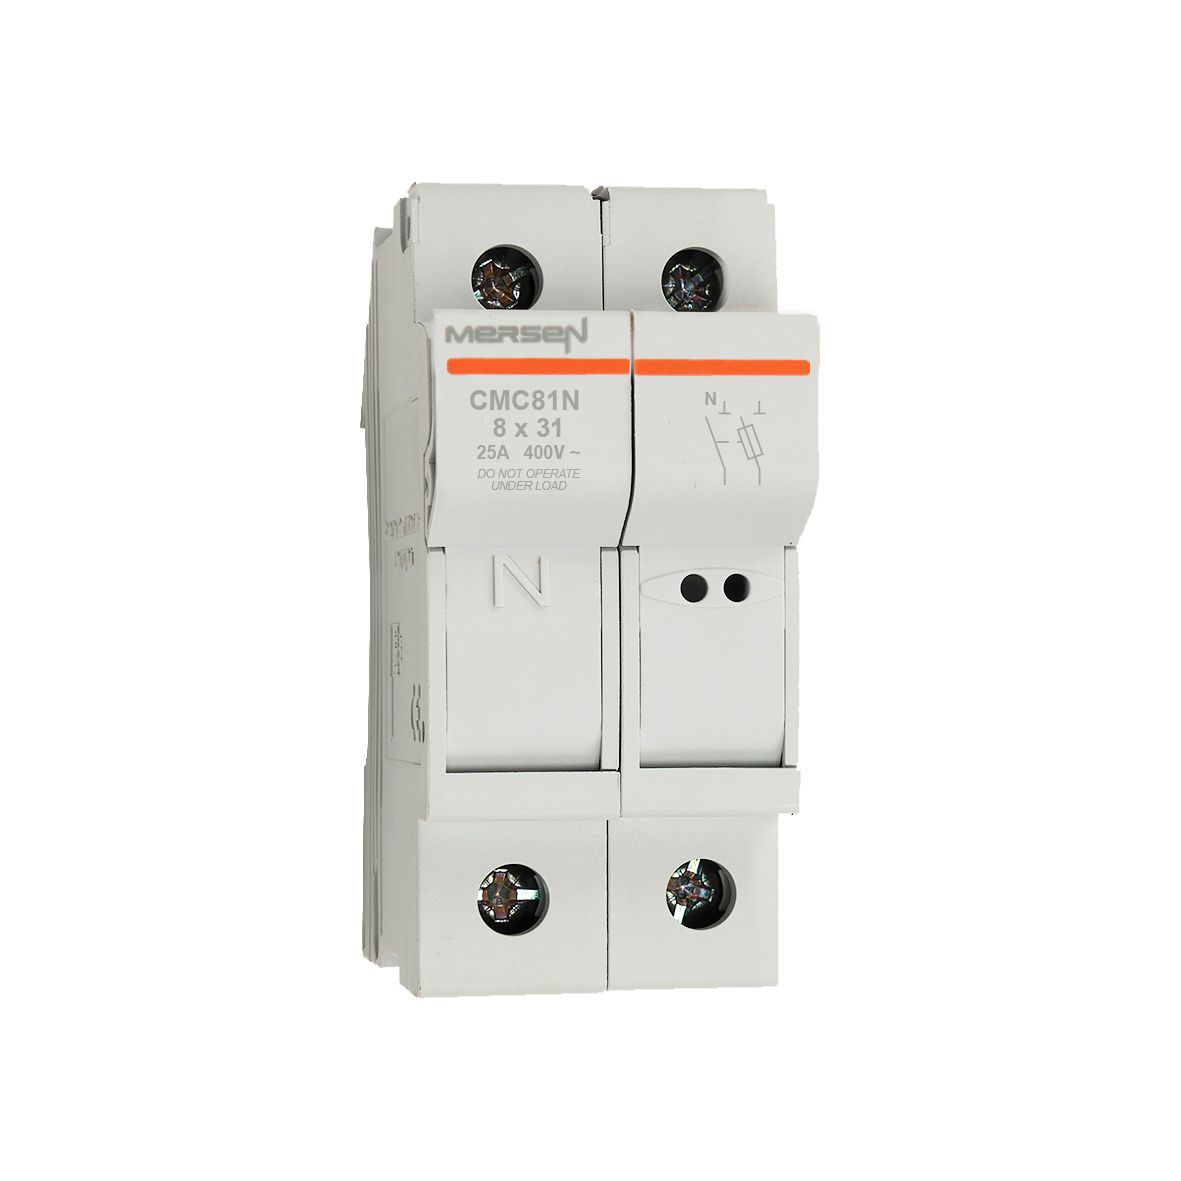 P1062682 - CMC8 modular fuse holder, IEC, 1P+N, 8x32, DIN rail mounting, IP20